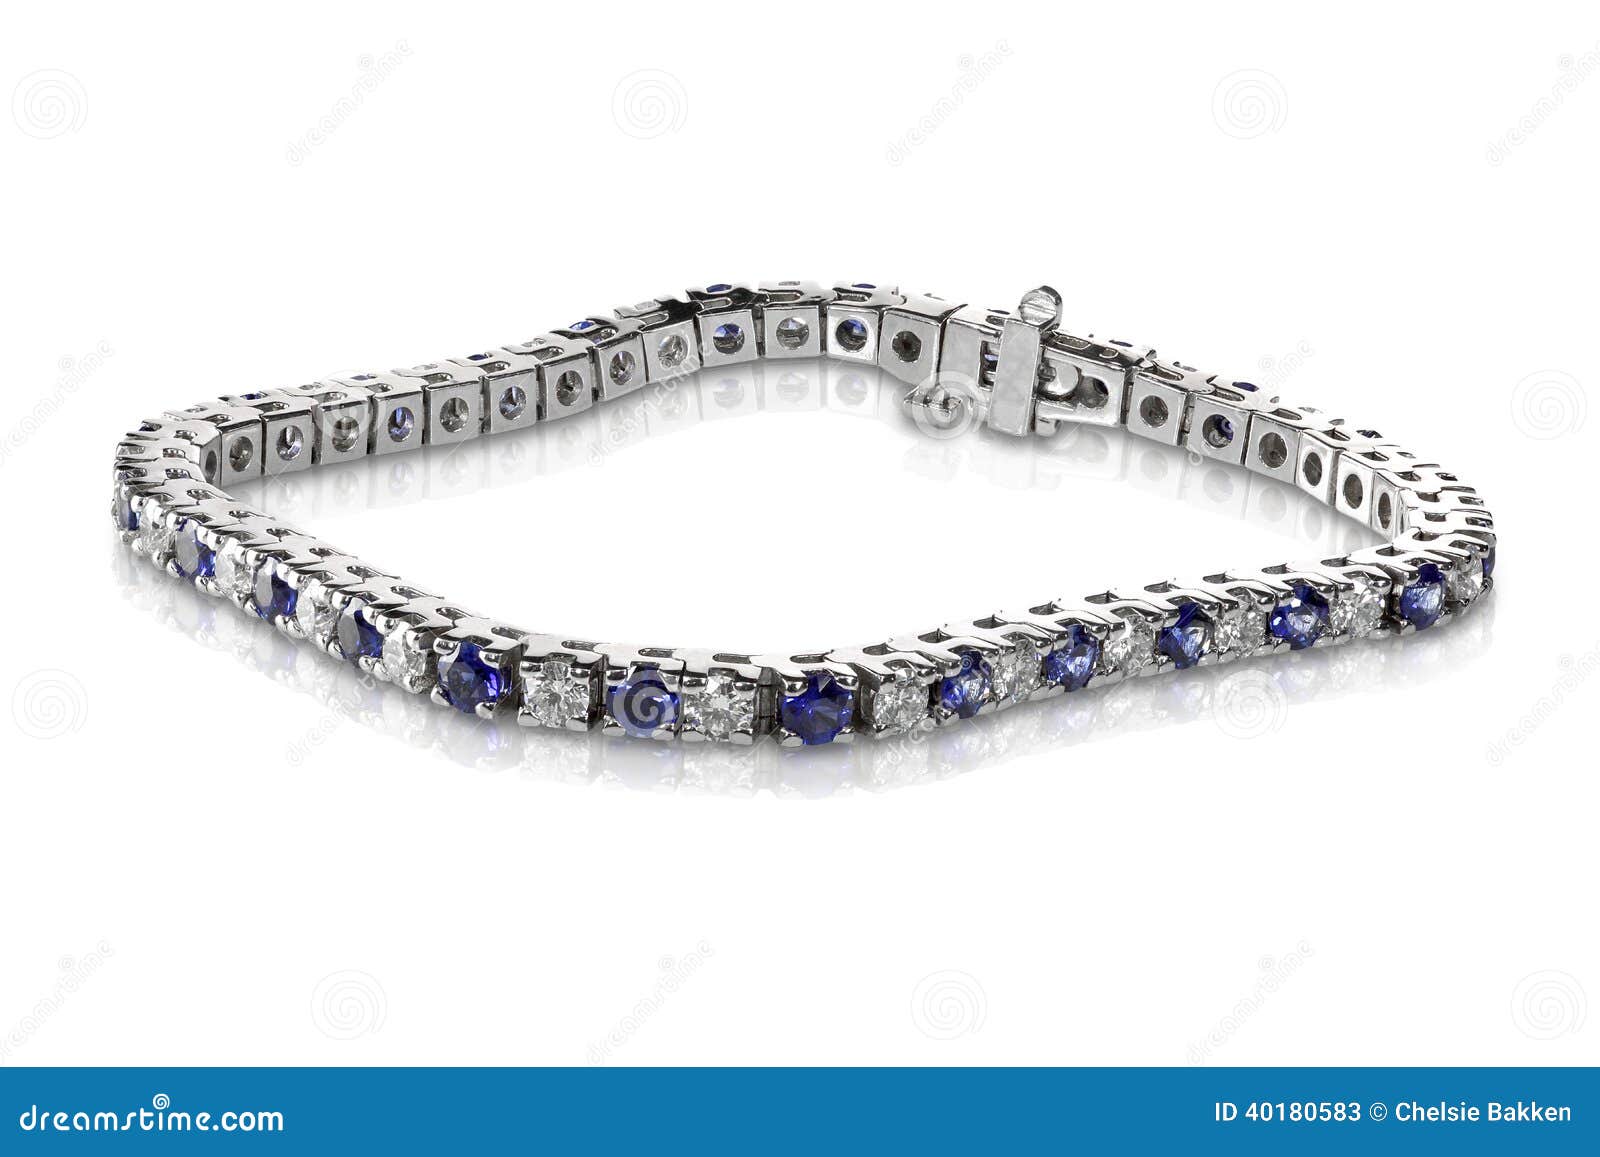 diamond and sapphire tennis bracelet